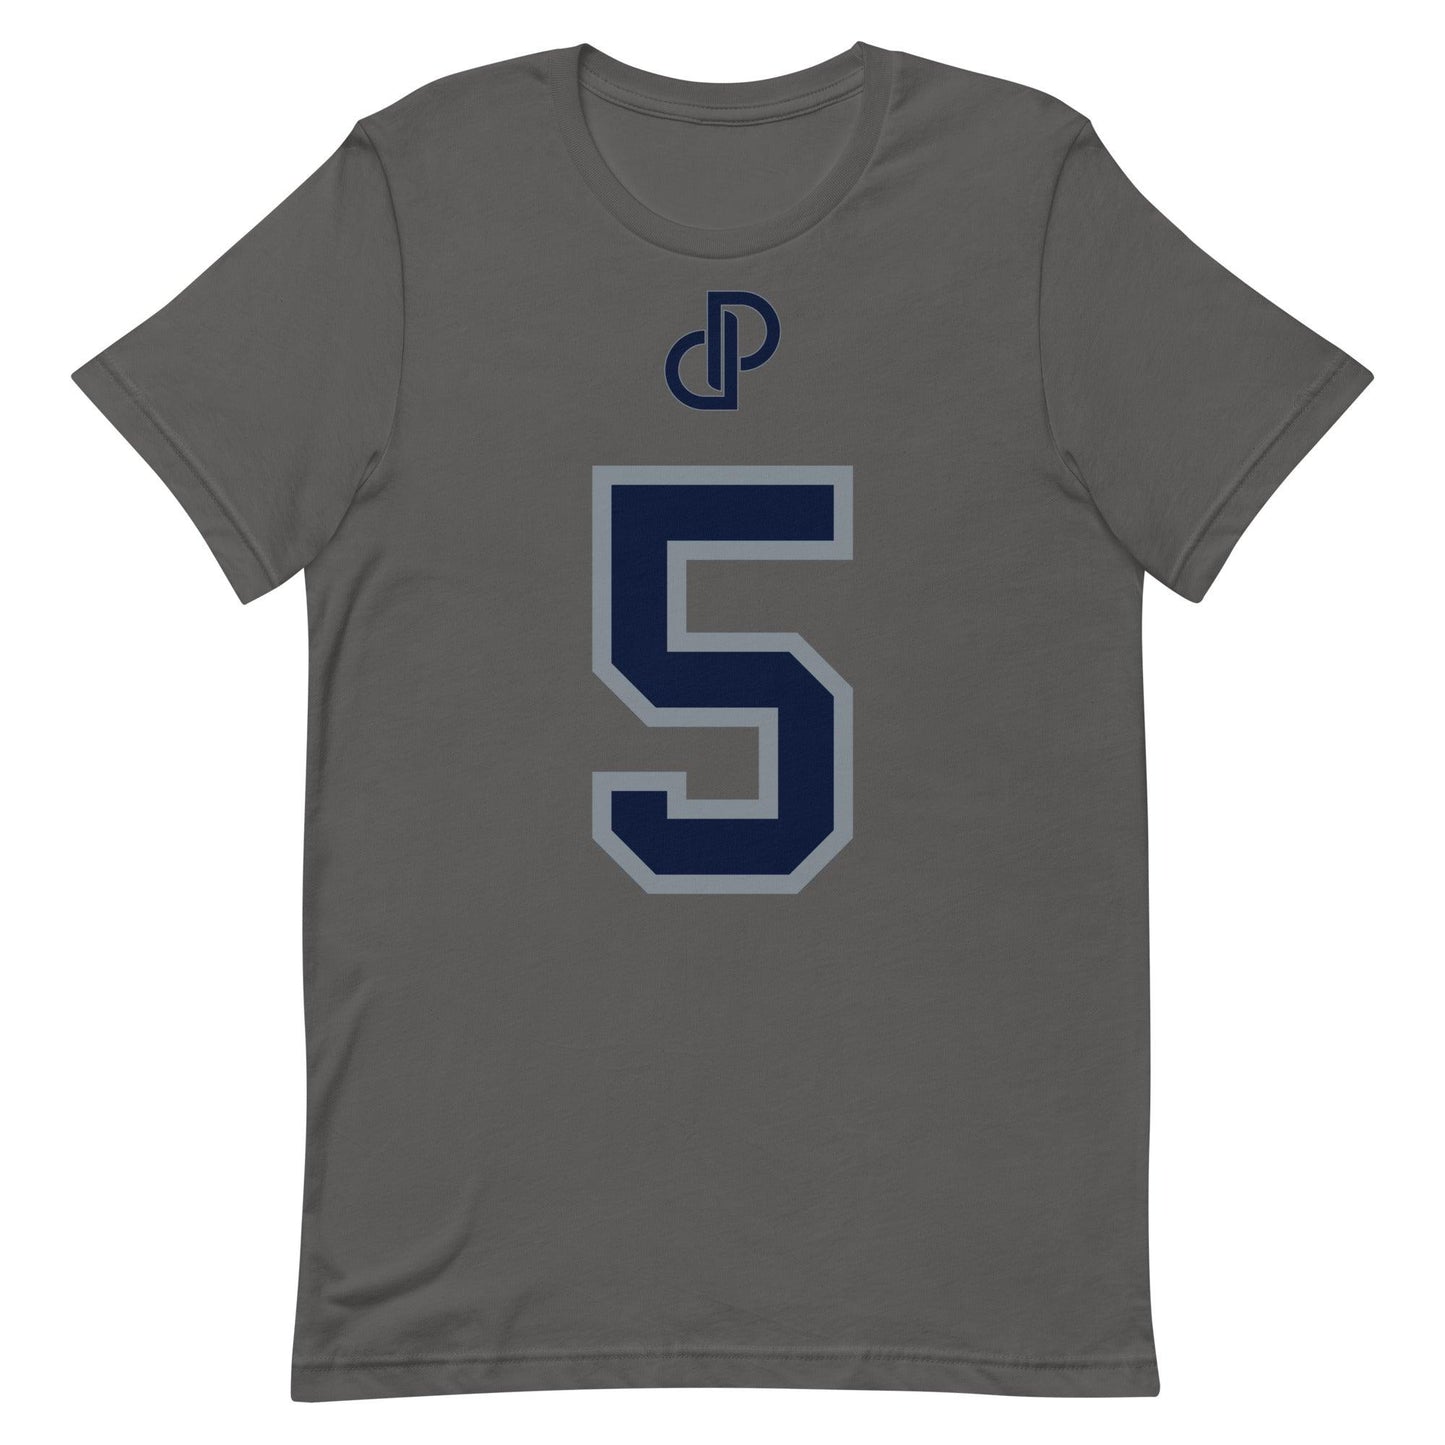 David Pindell "Jersey" t-shirt - Fan Arch